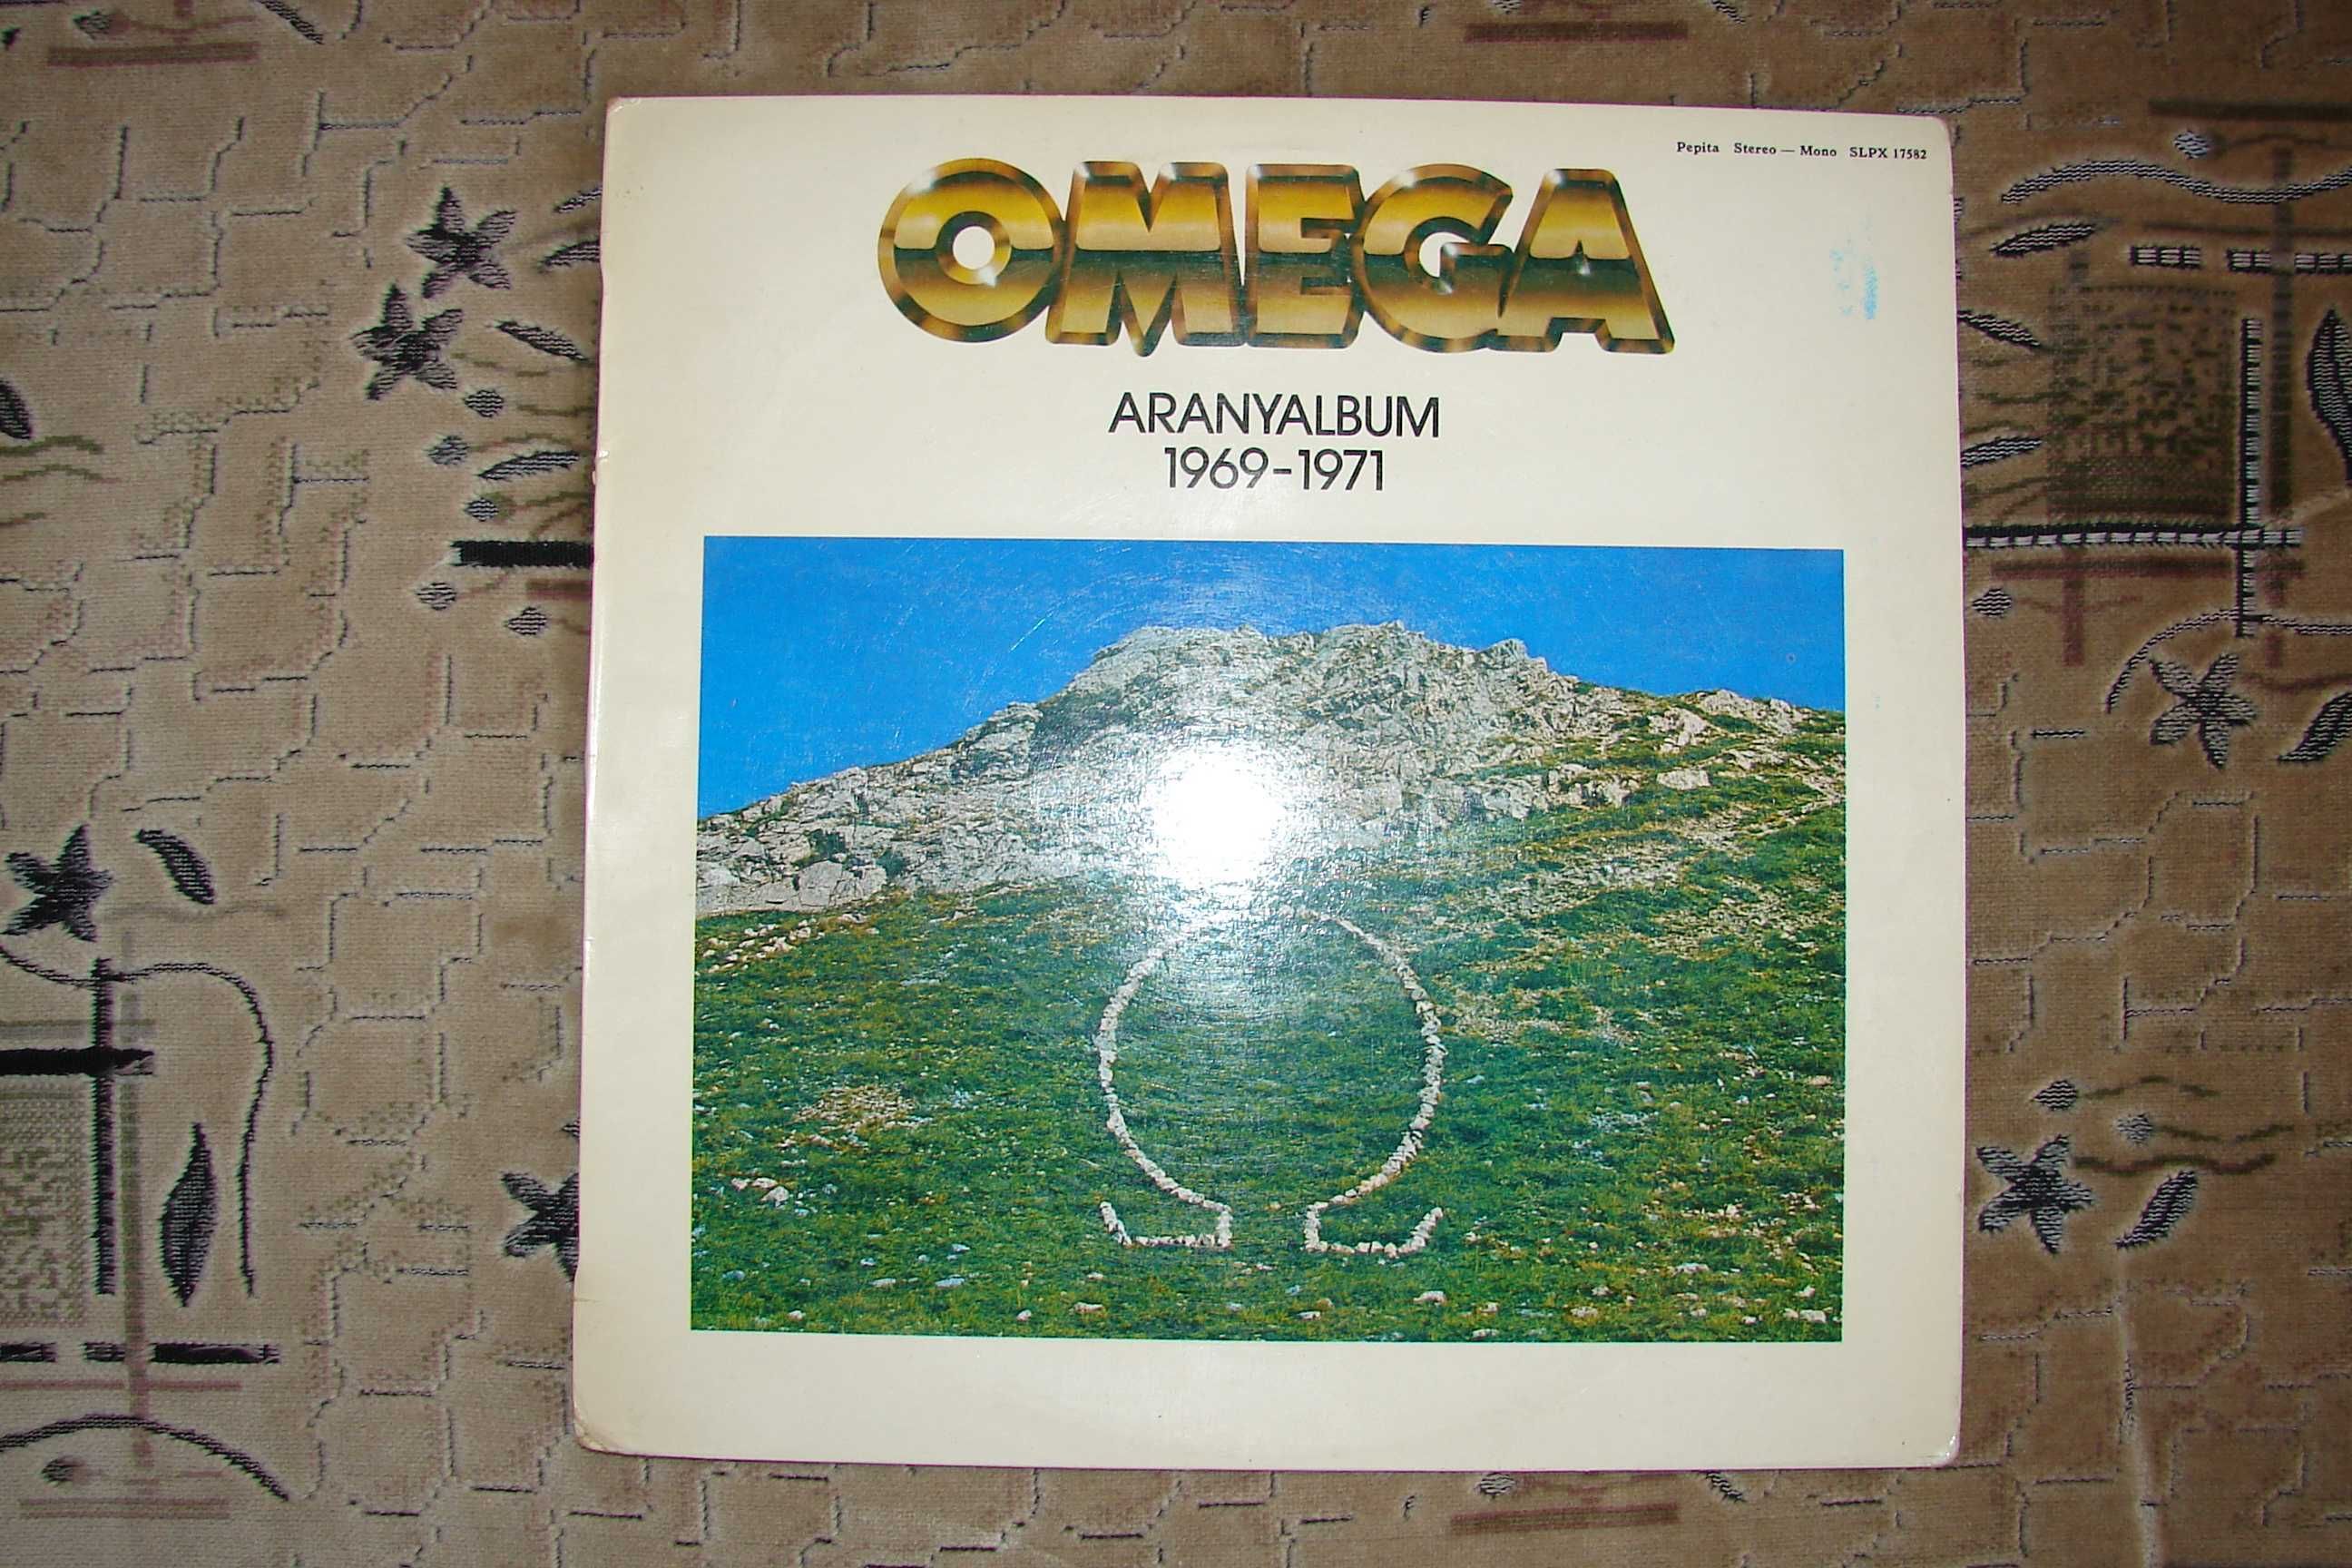 Продається LP OMEGA - Aranyalbum ( 1969 - 1971 )